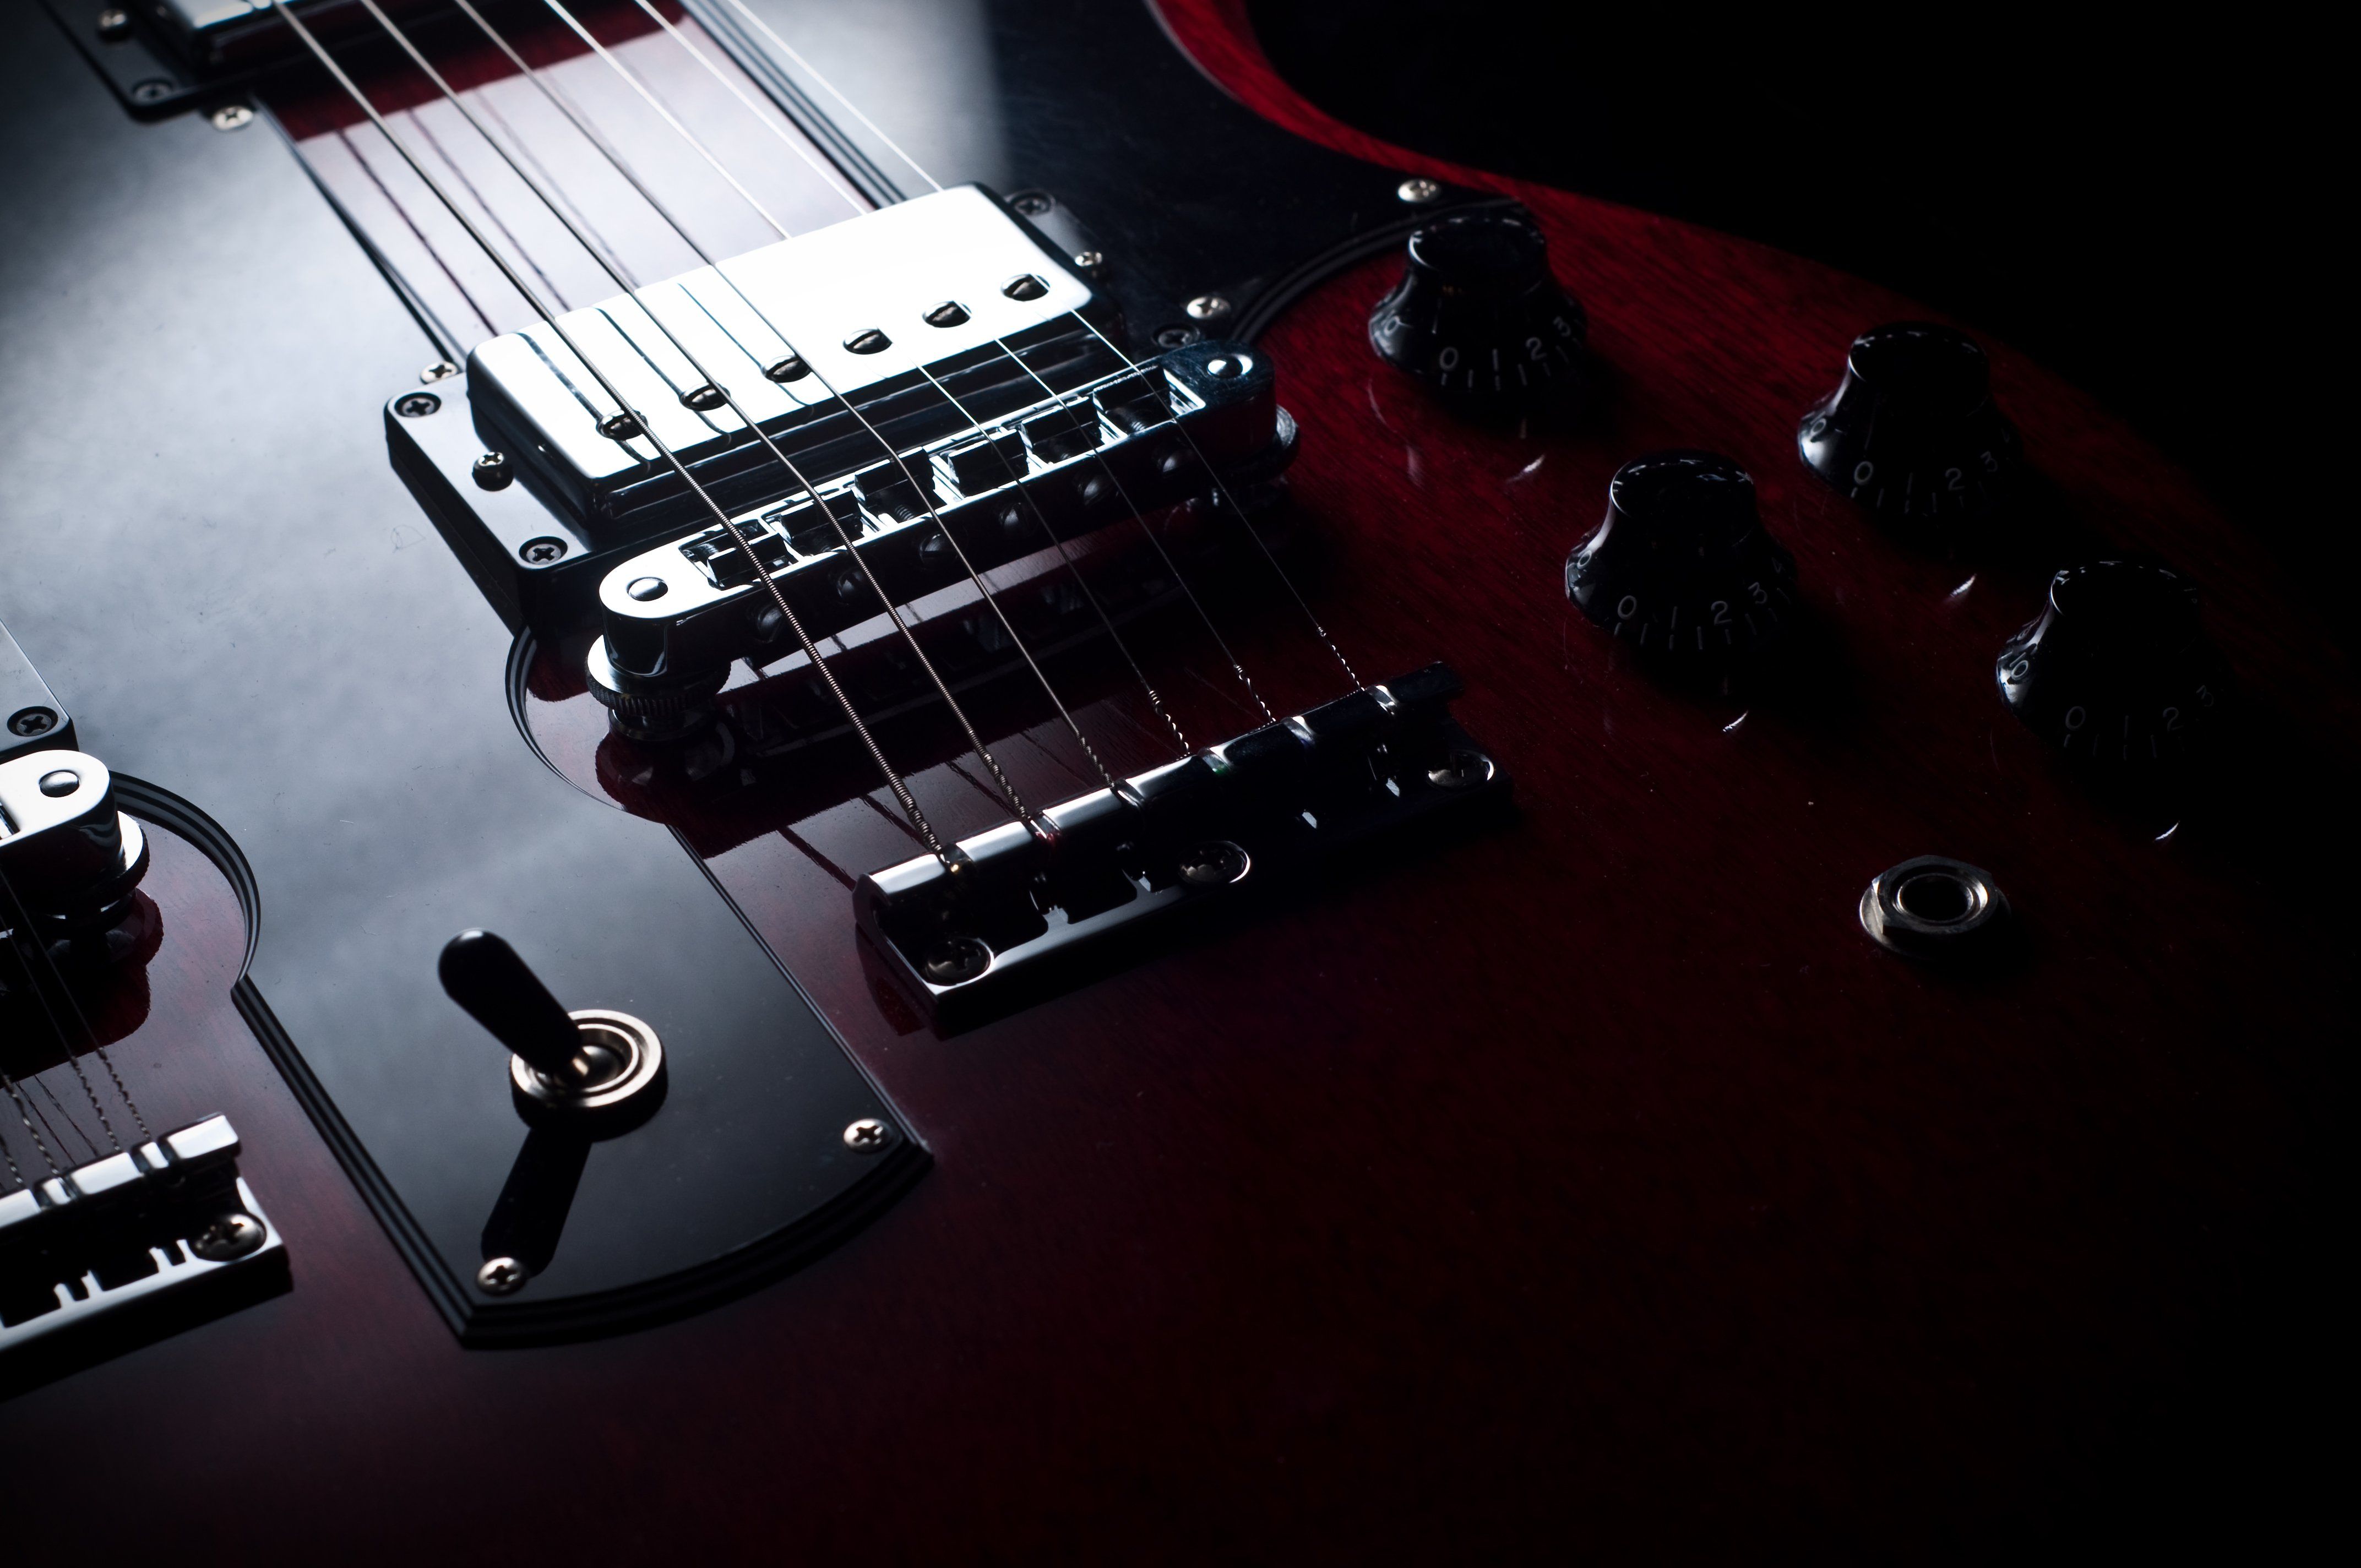 Electric gibson fender Guitar reflection strings macro music art